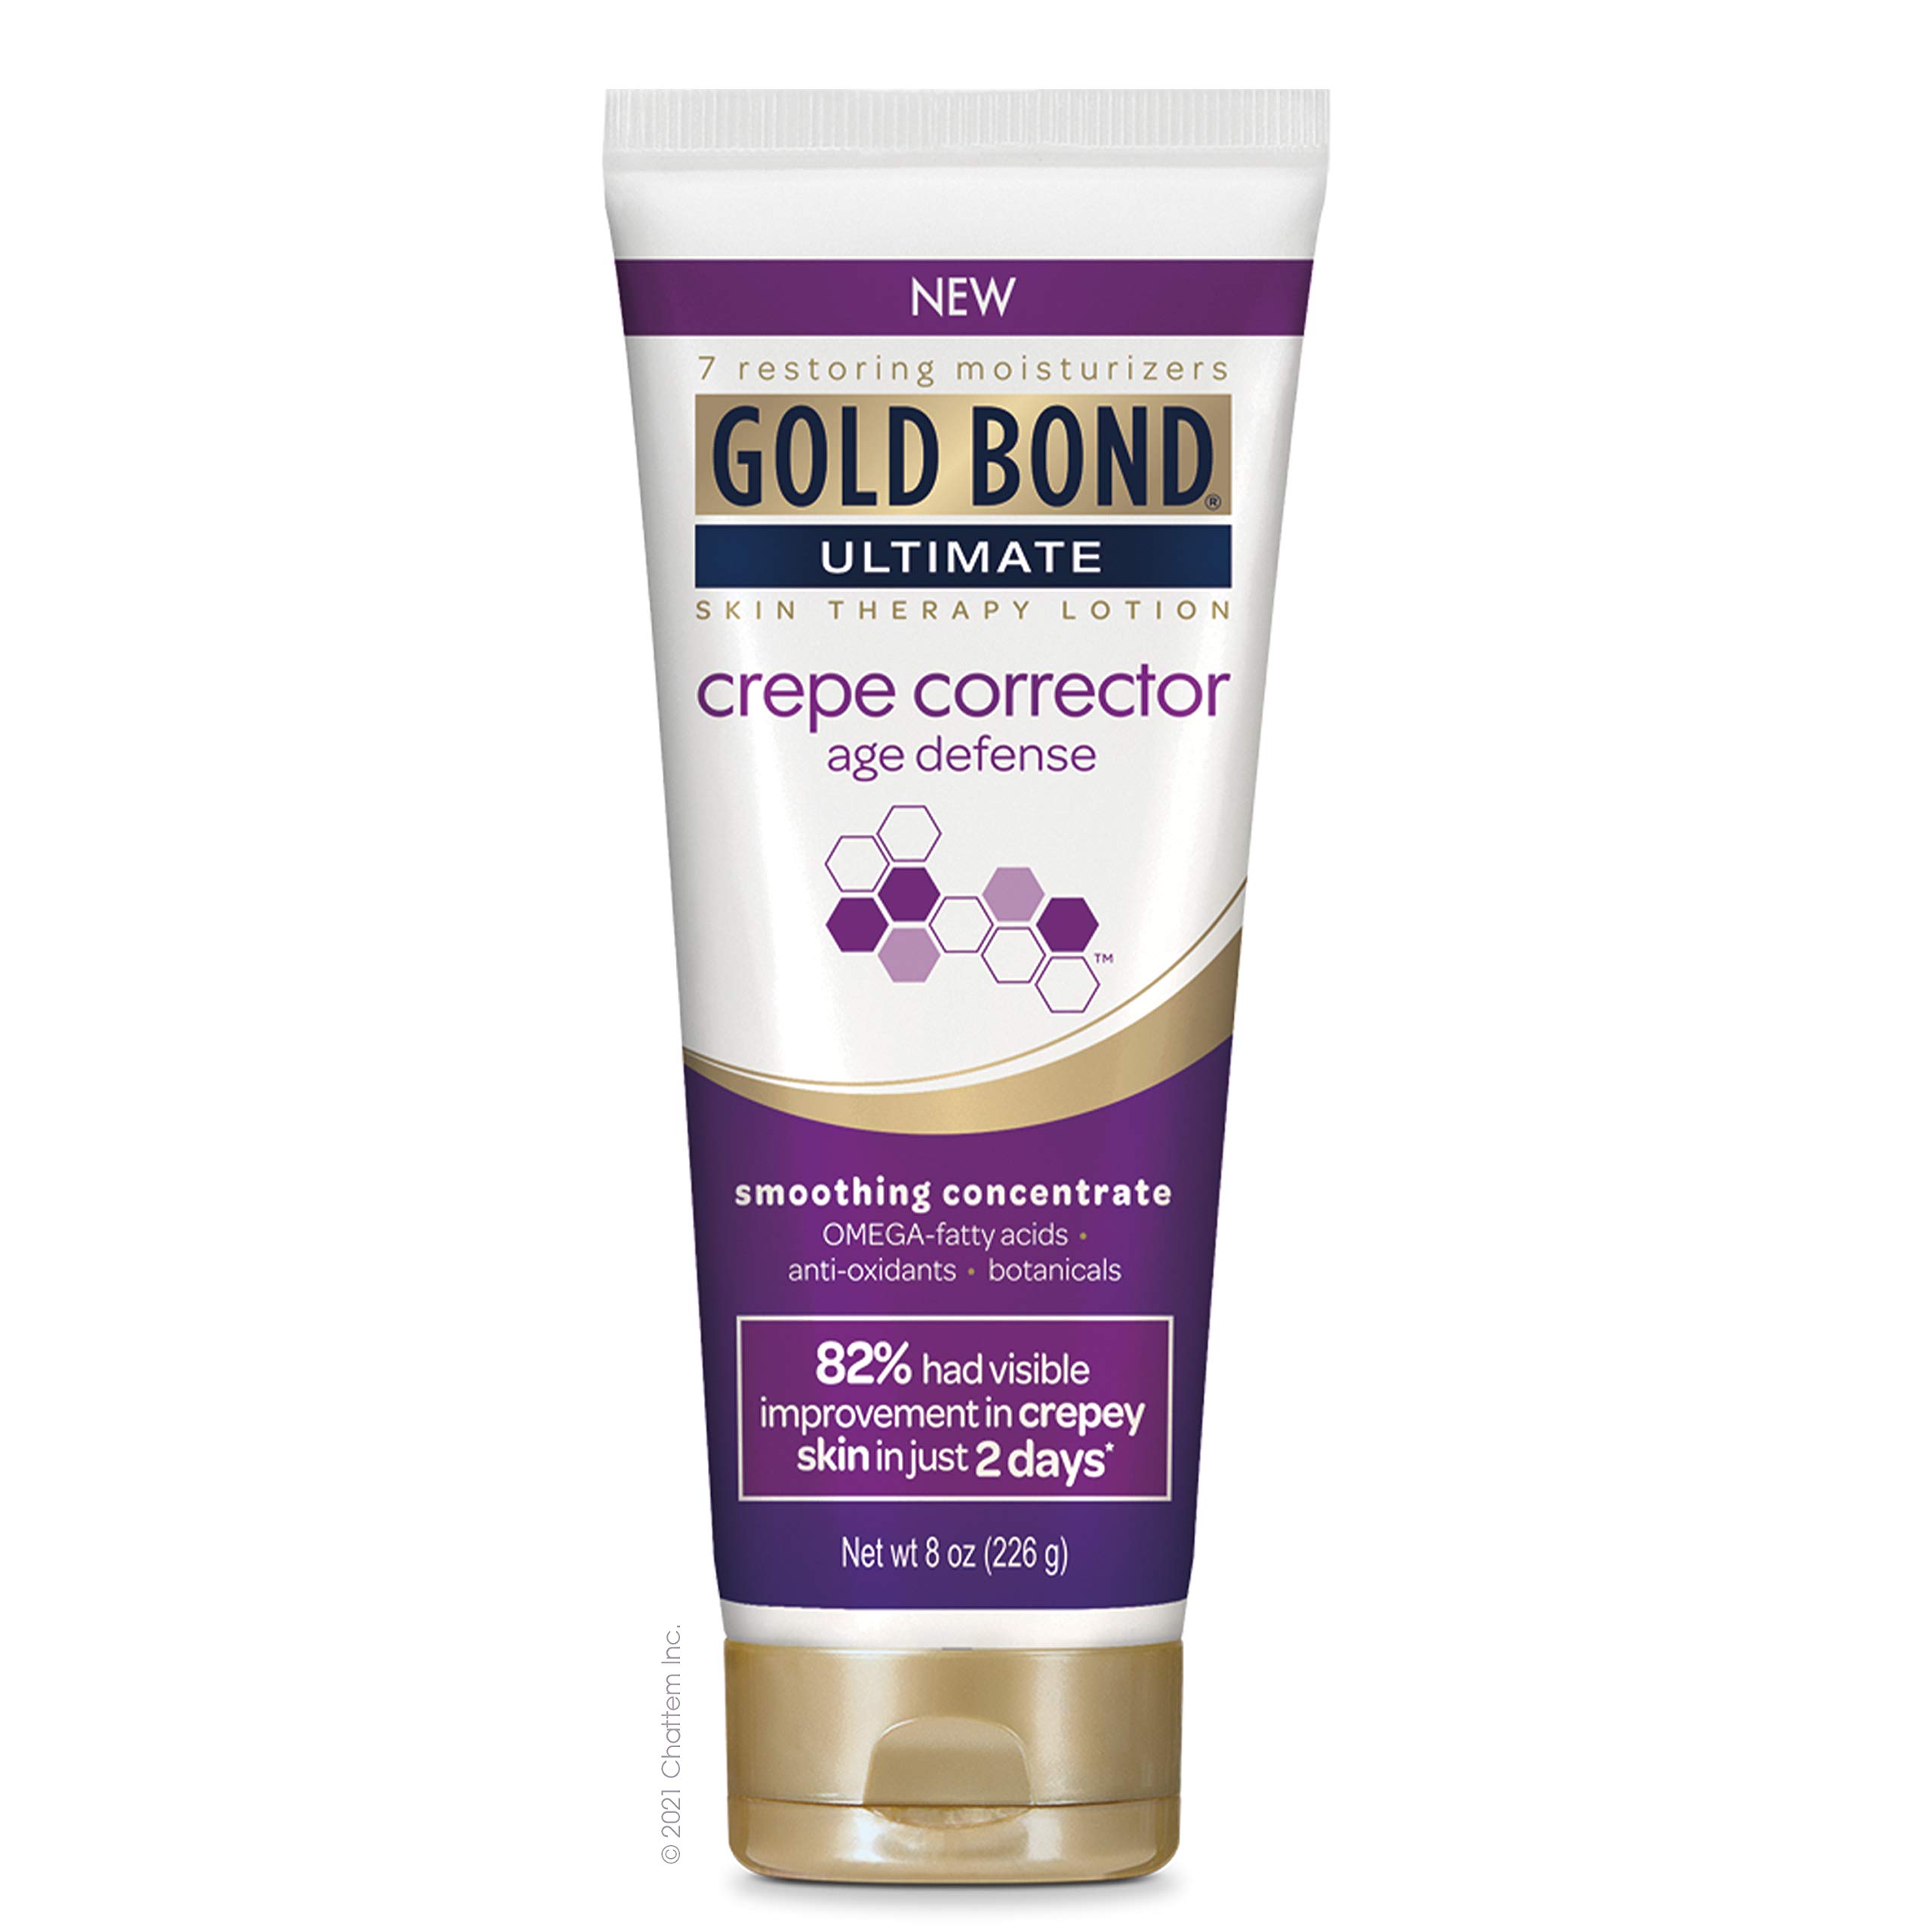 Gold Bond Ultimate Crepe Corrector 8oz $2.98 Discount Coupon $6.99